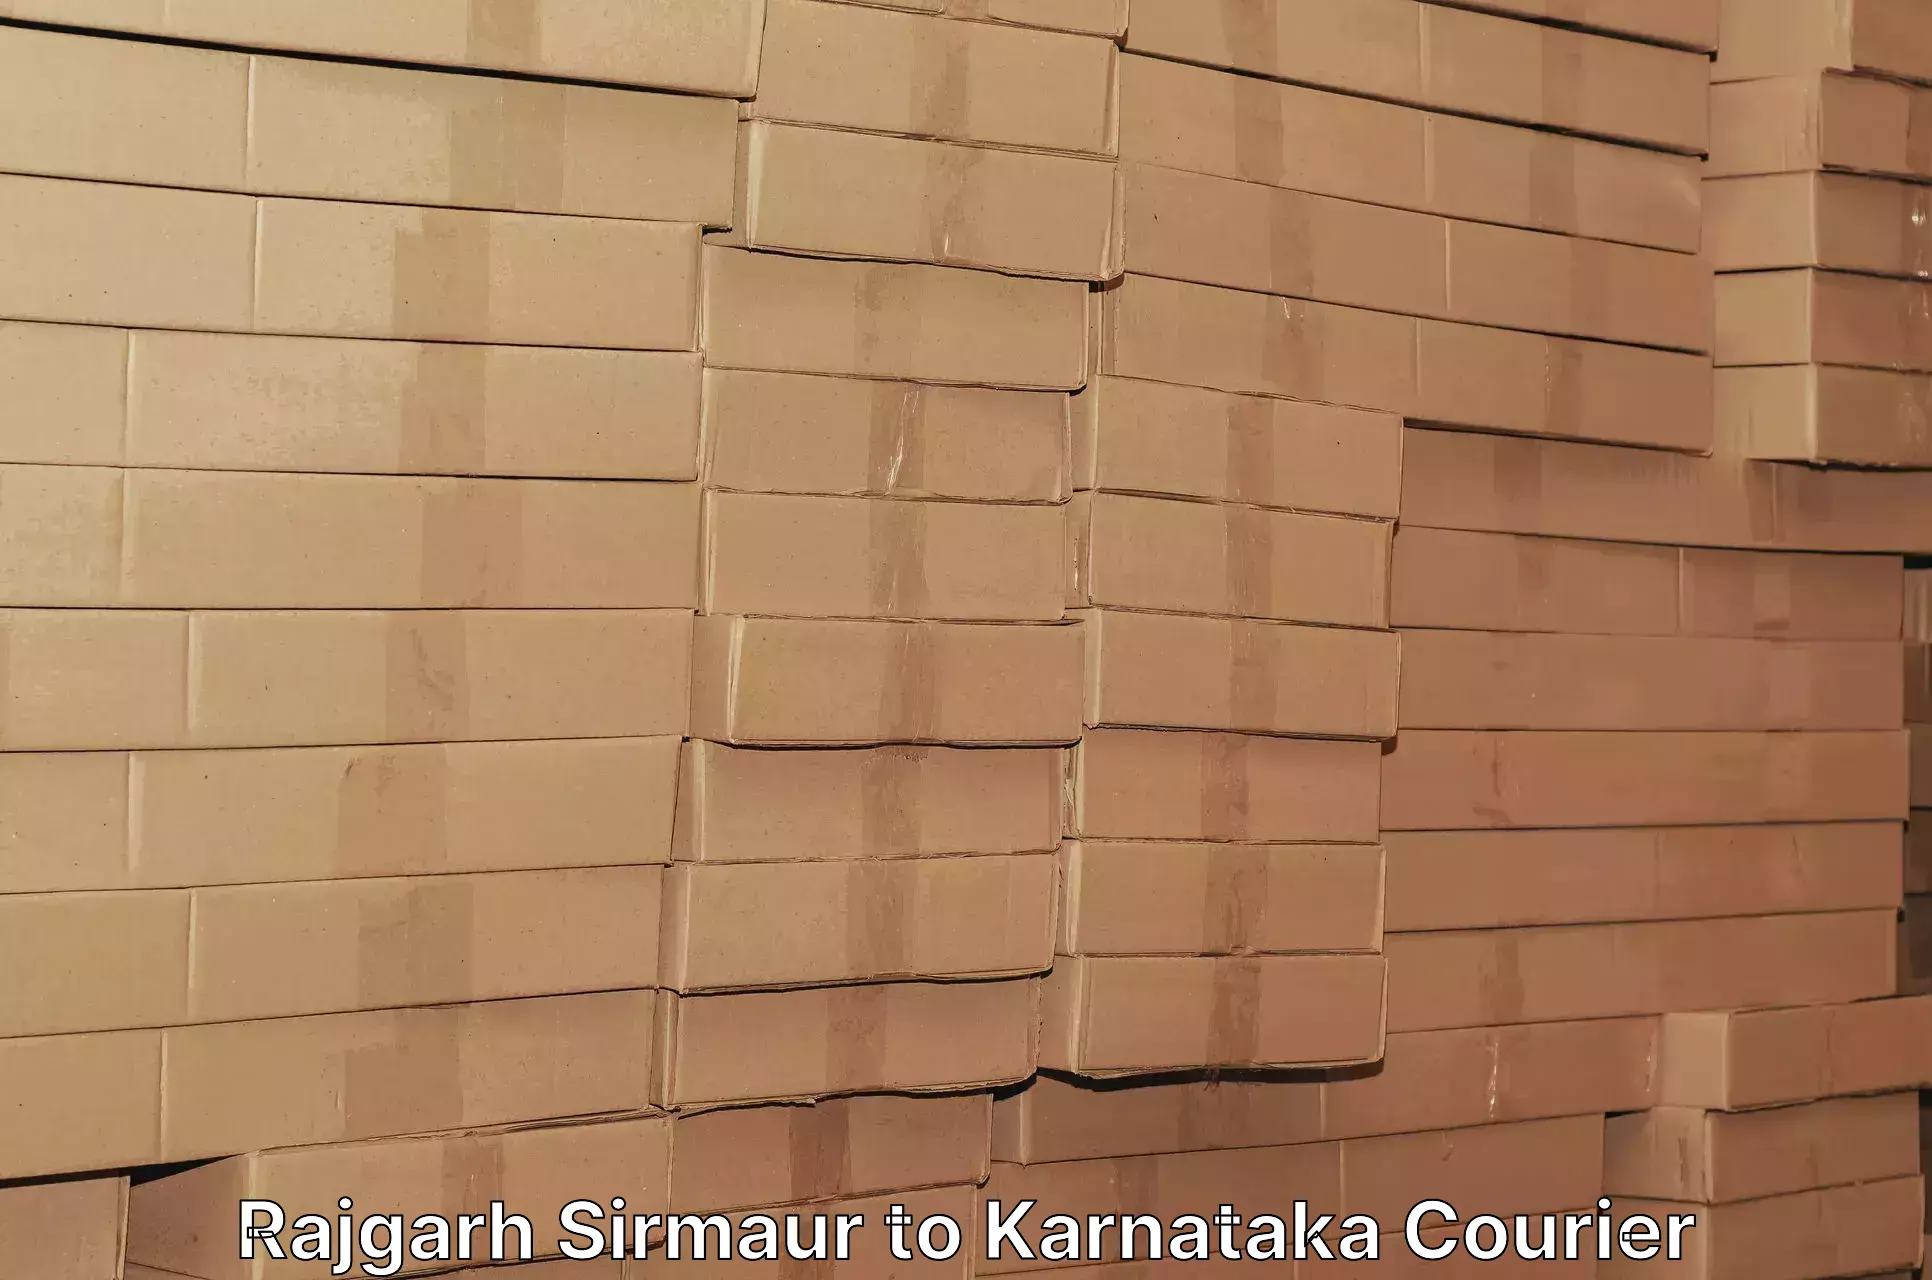 Professional courier handling Rajgarh Sirmaur to Kumta